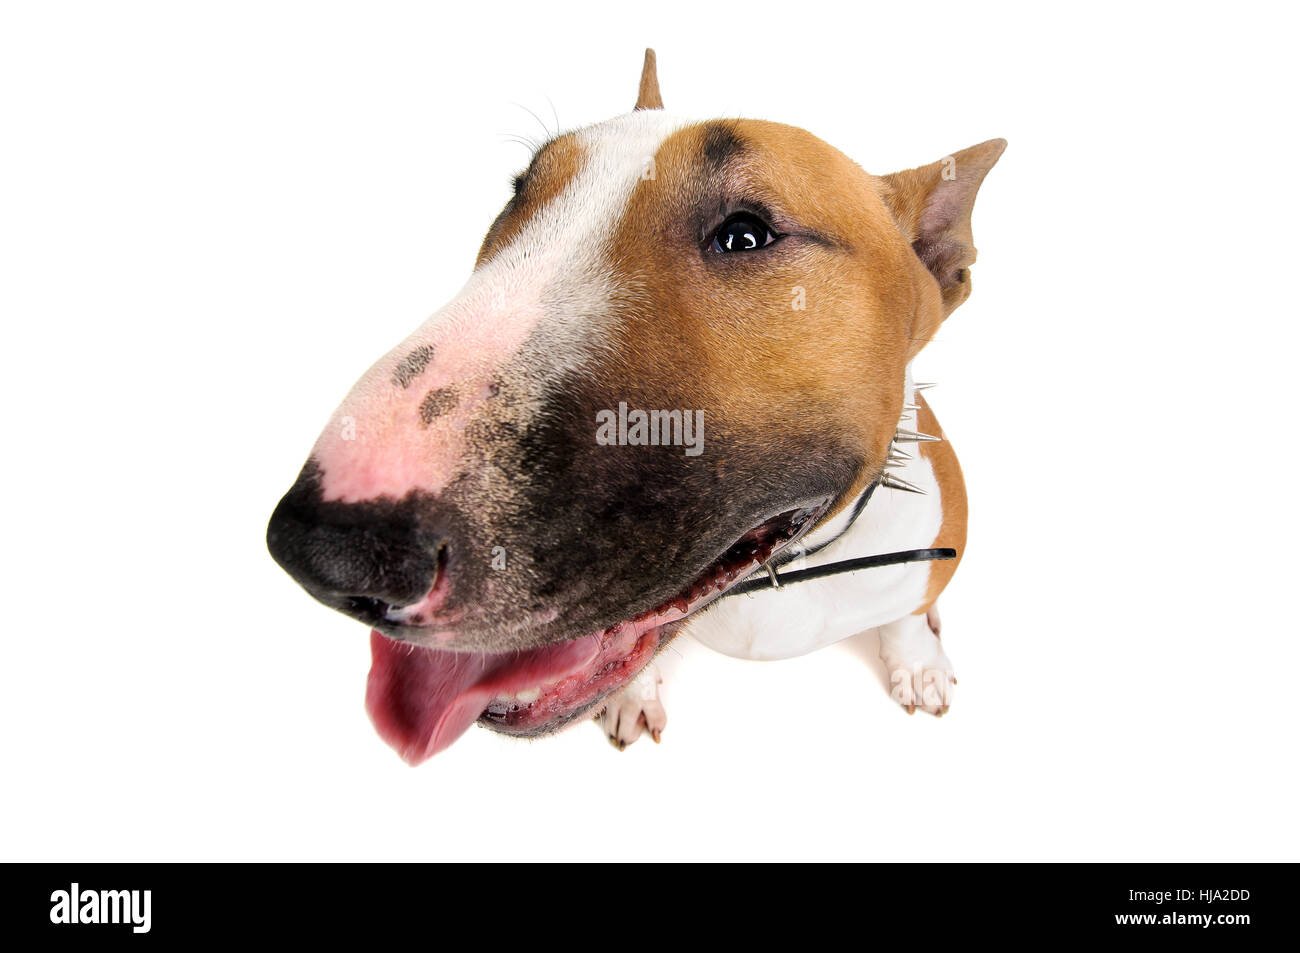 animal, dog, breed, canine, maddening, pert, coquettish, cute, friend, Stock Photo